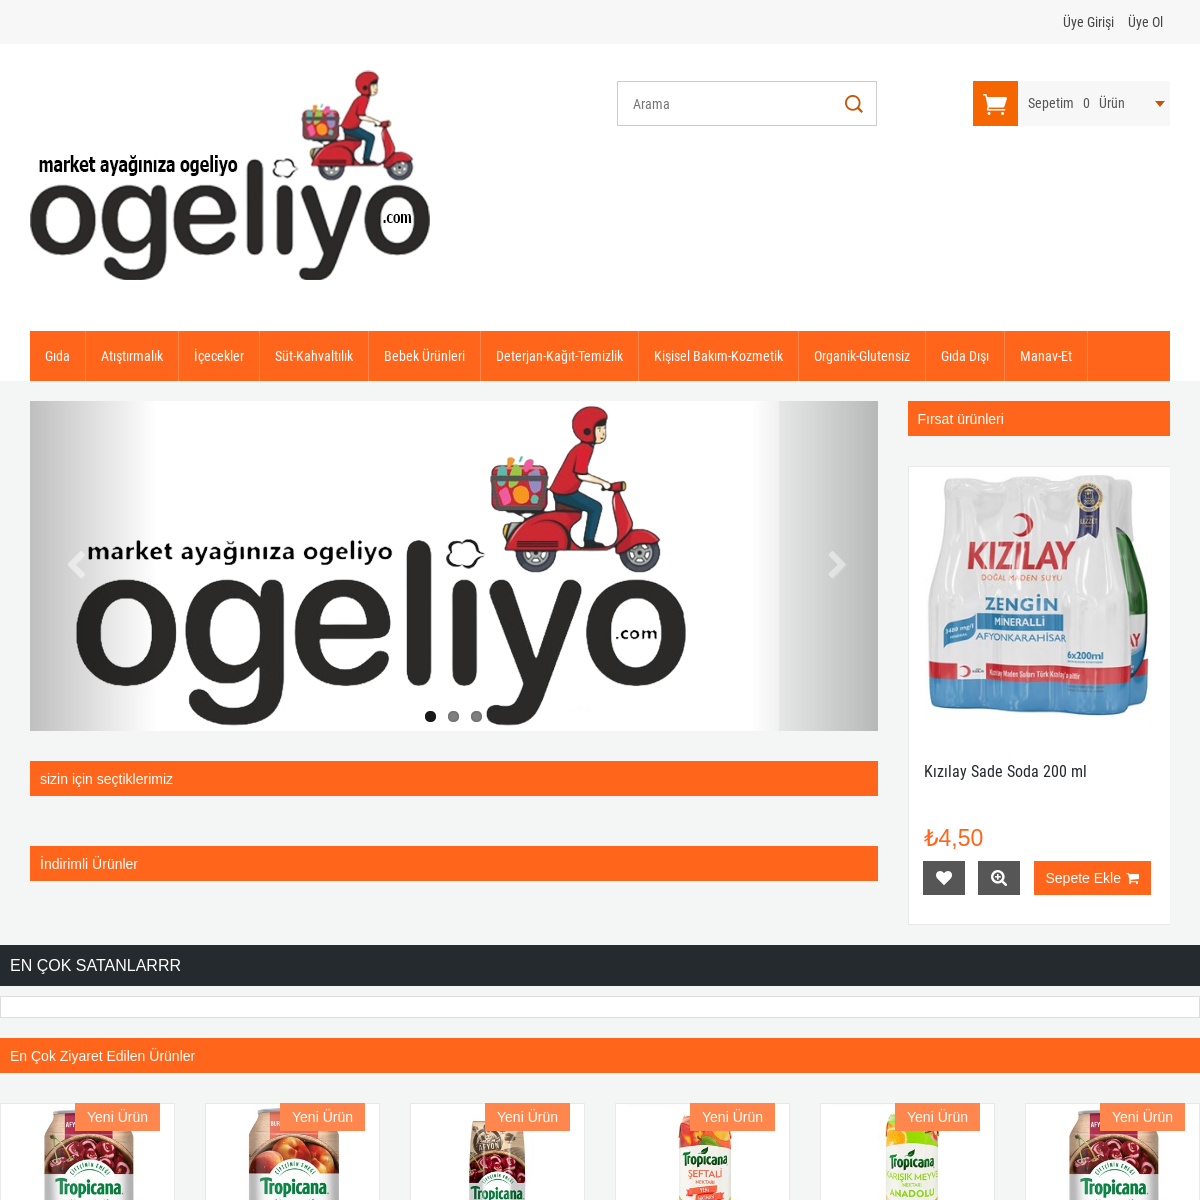 A complete backup of ogeliyo.com